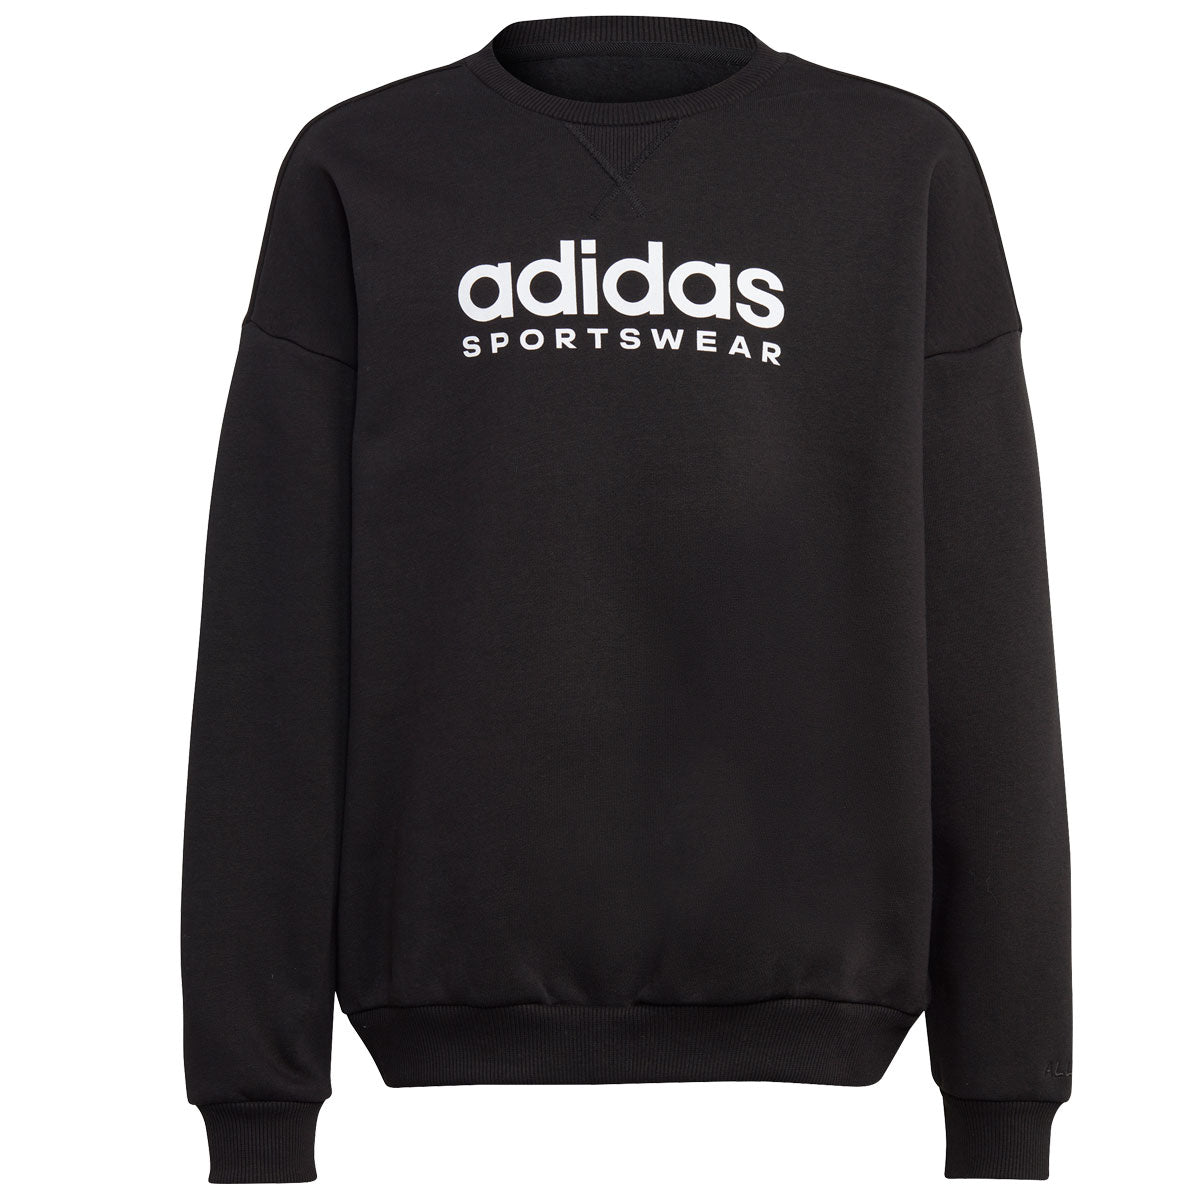 adidas All Season Crew Sweatshirt - Boys - Black/White